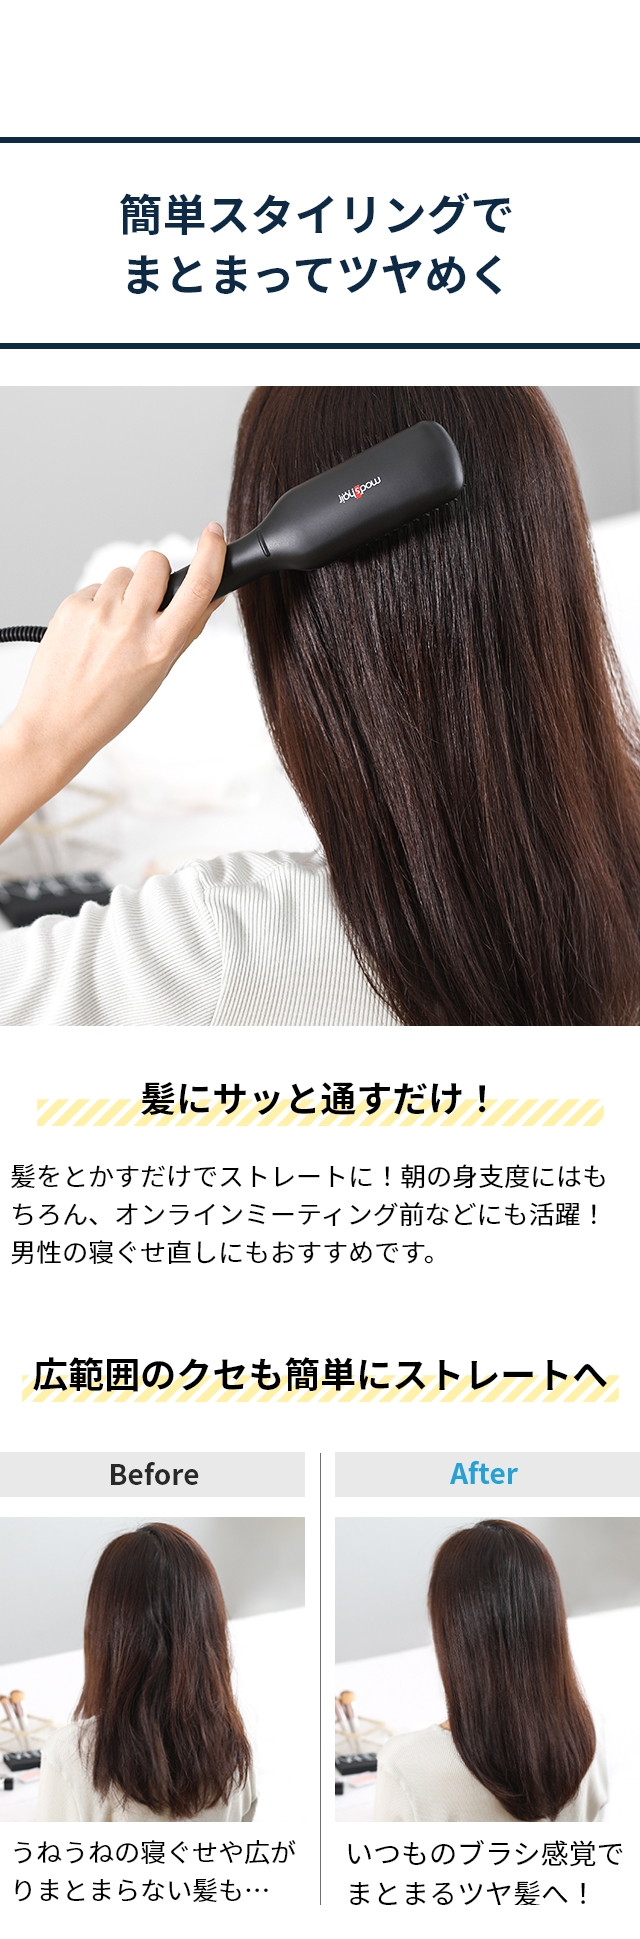 mod's hair (モッズヘア) コンパクトヒートブラシ MHB-3040